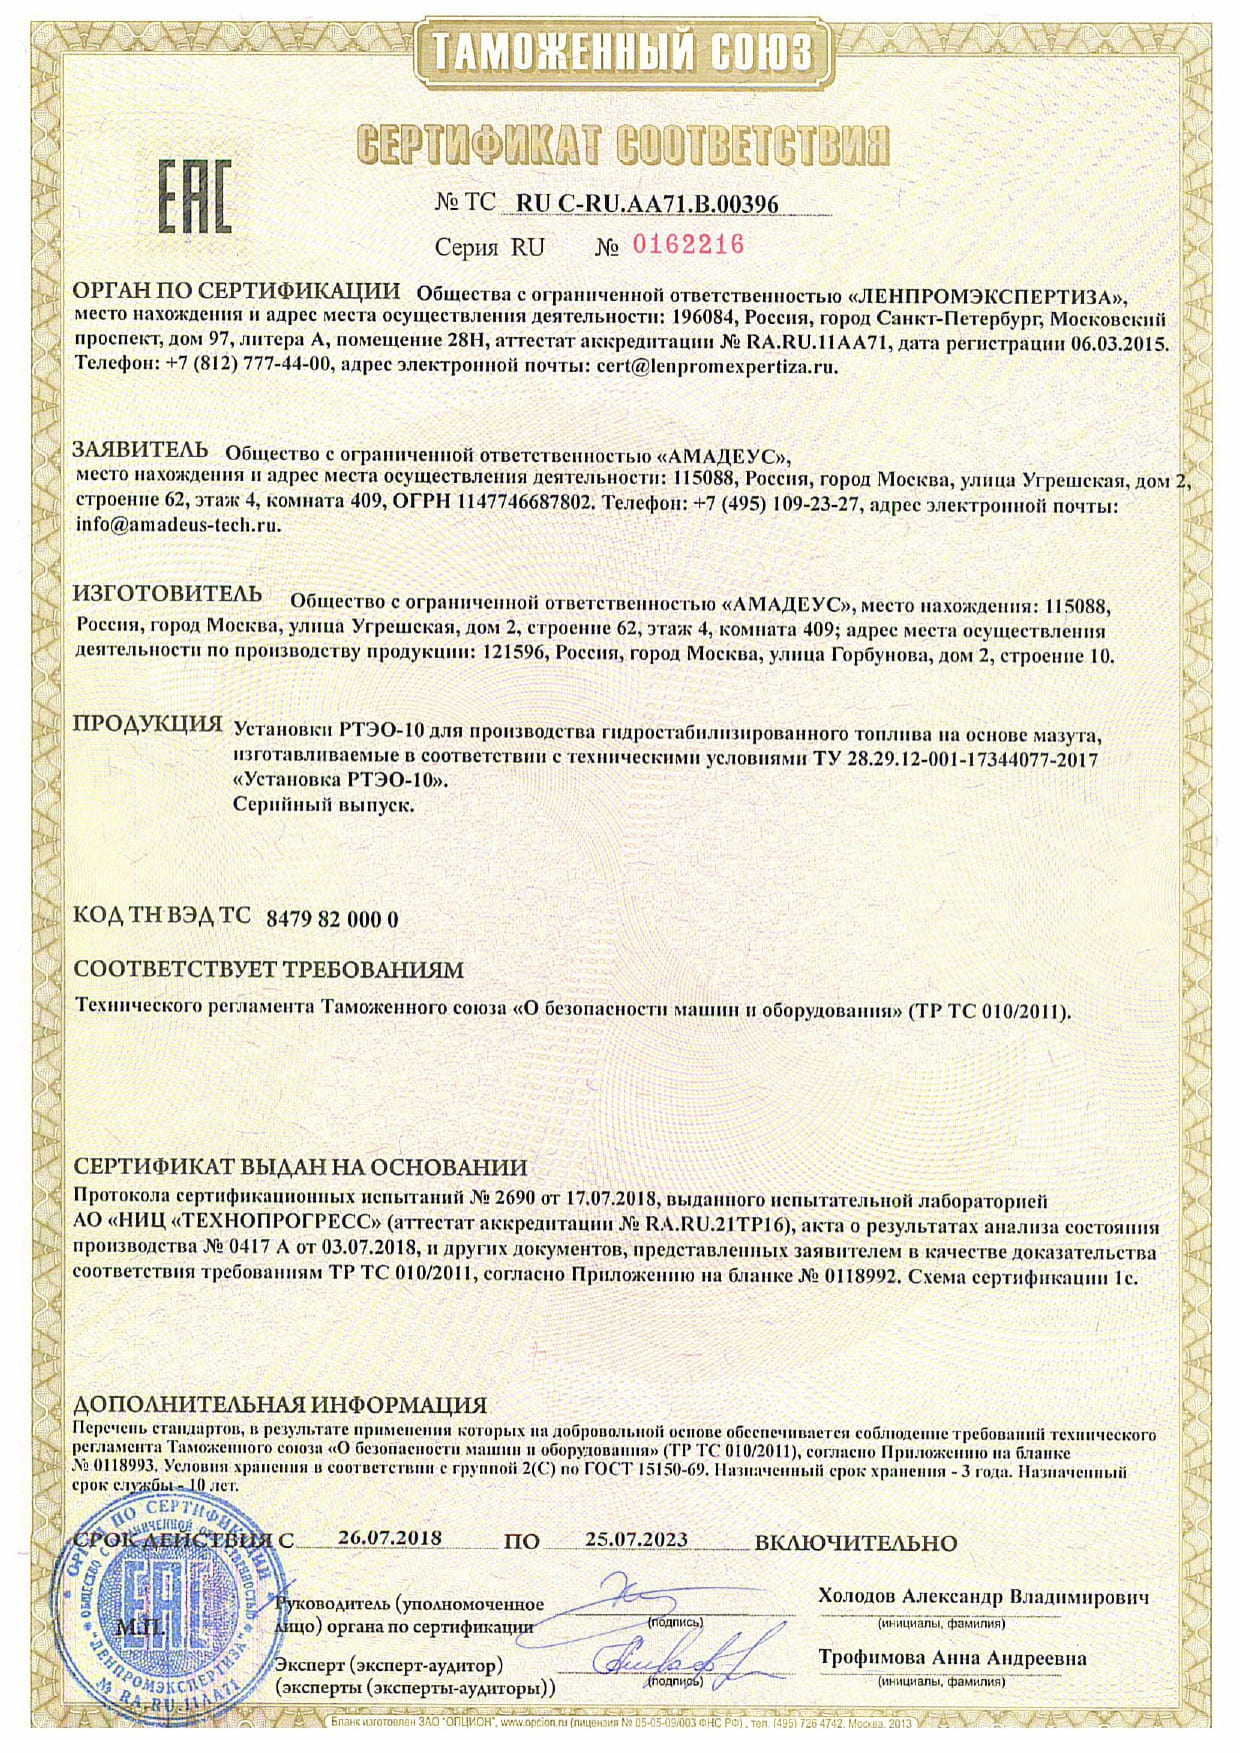 Сертификат о безопасности Установки РТЭО